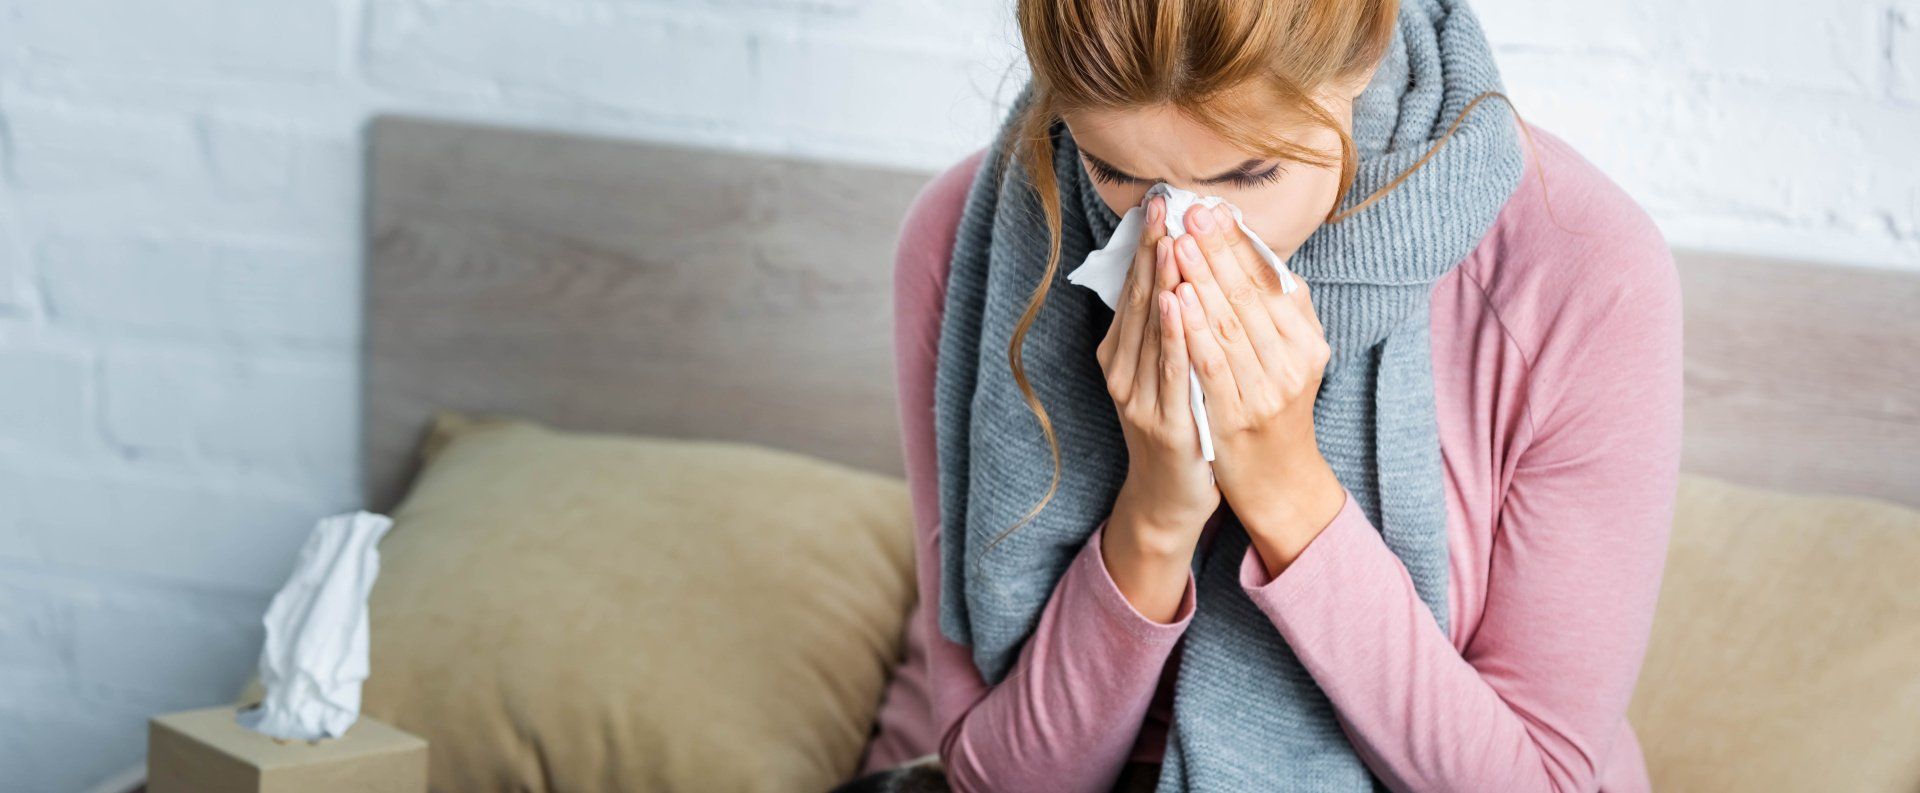 IV Hydration for Cold & Flu Season